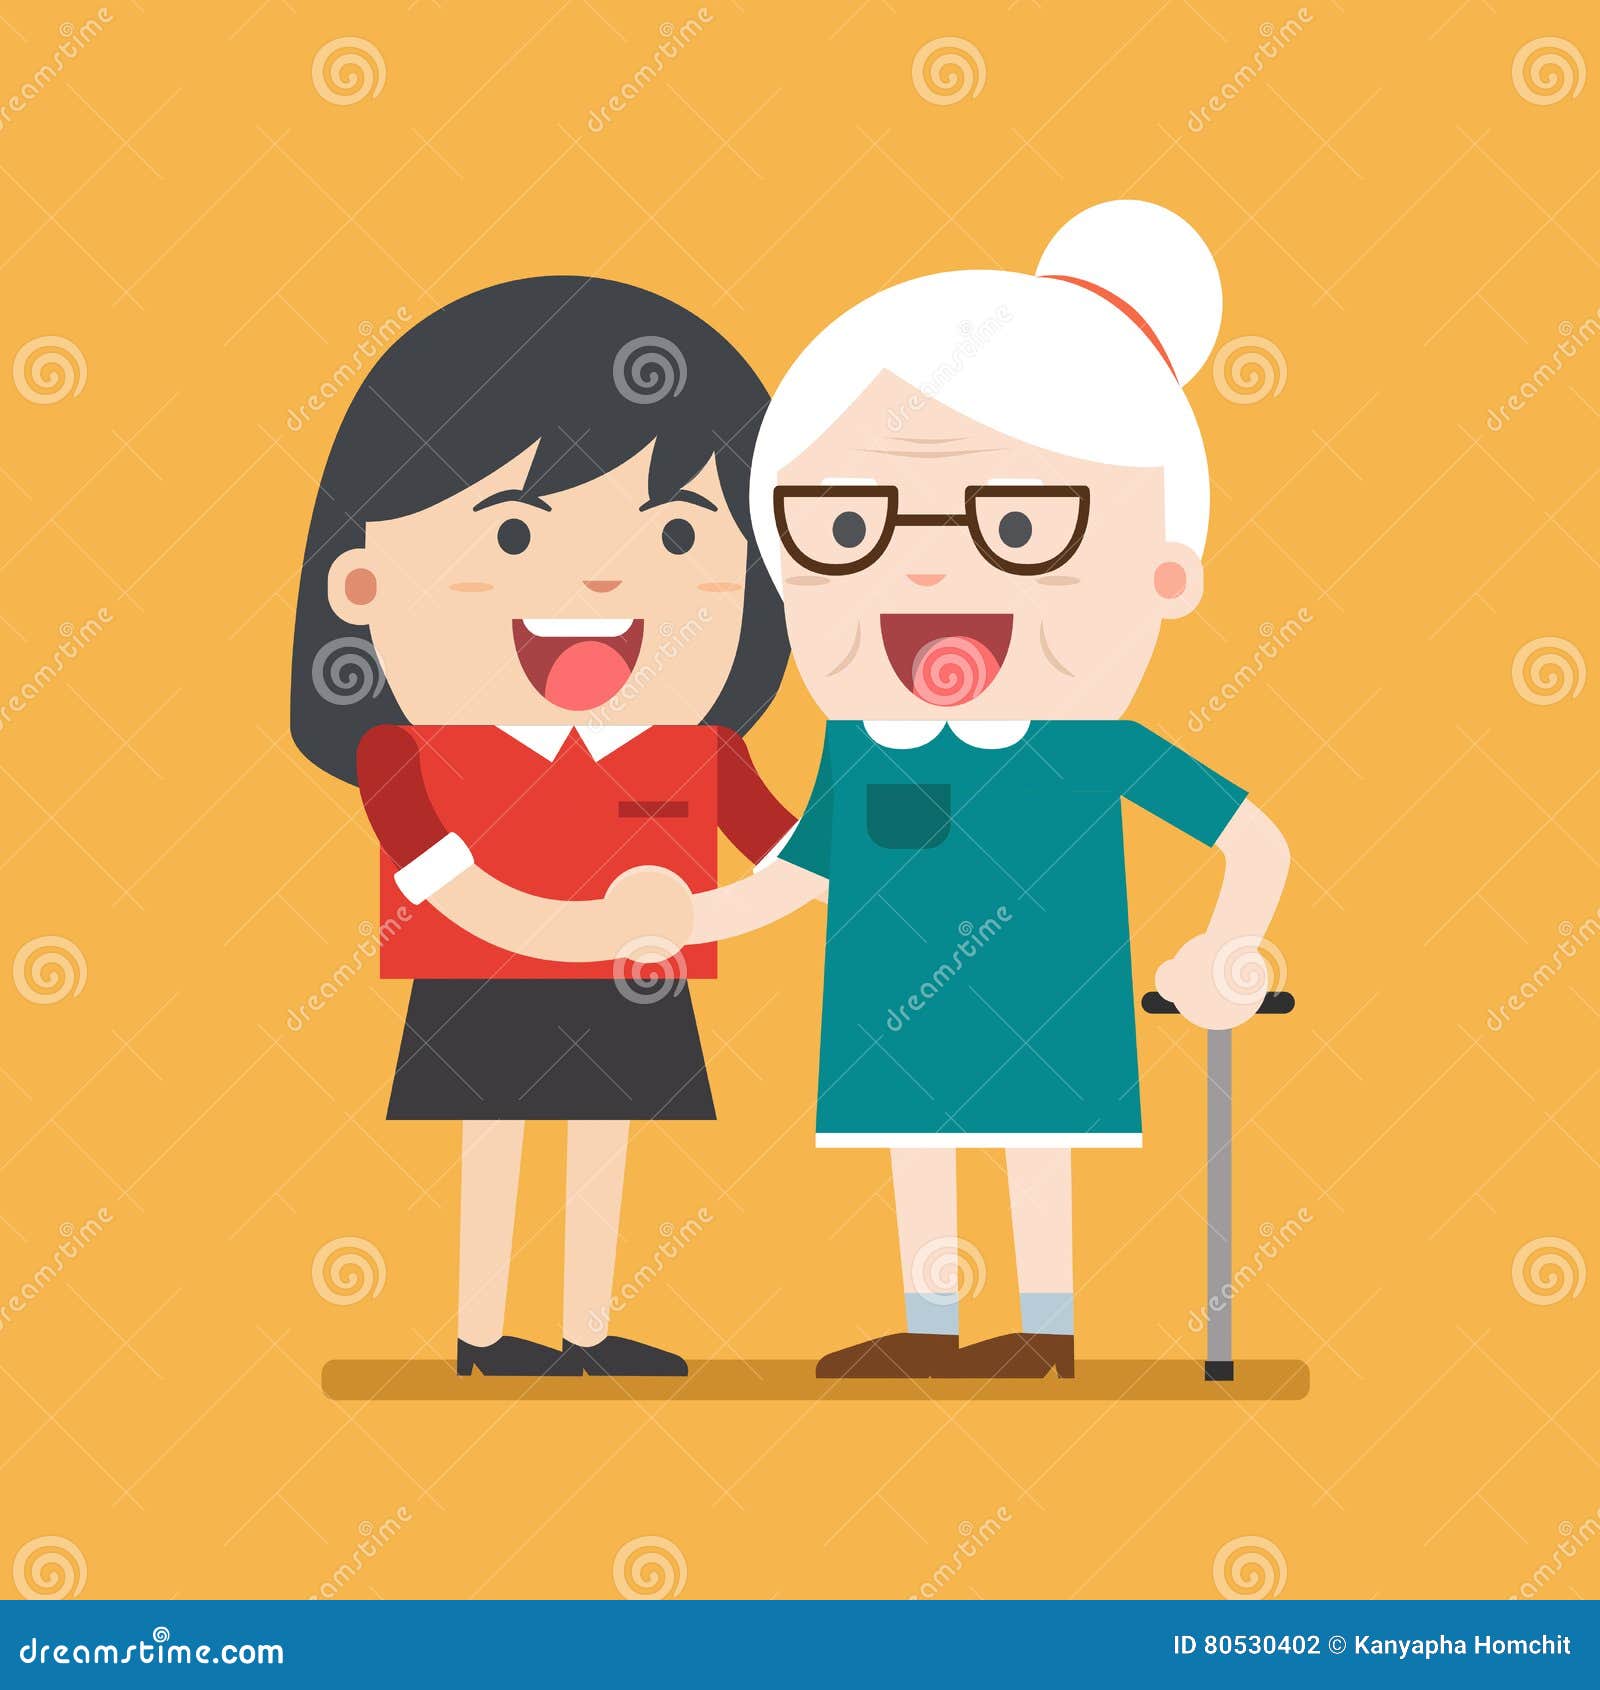 Caring For Seniors Cartoon Vector | CartoonDealer.com #62774033